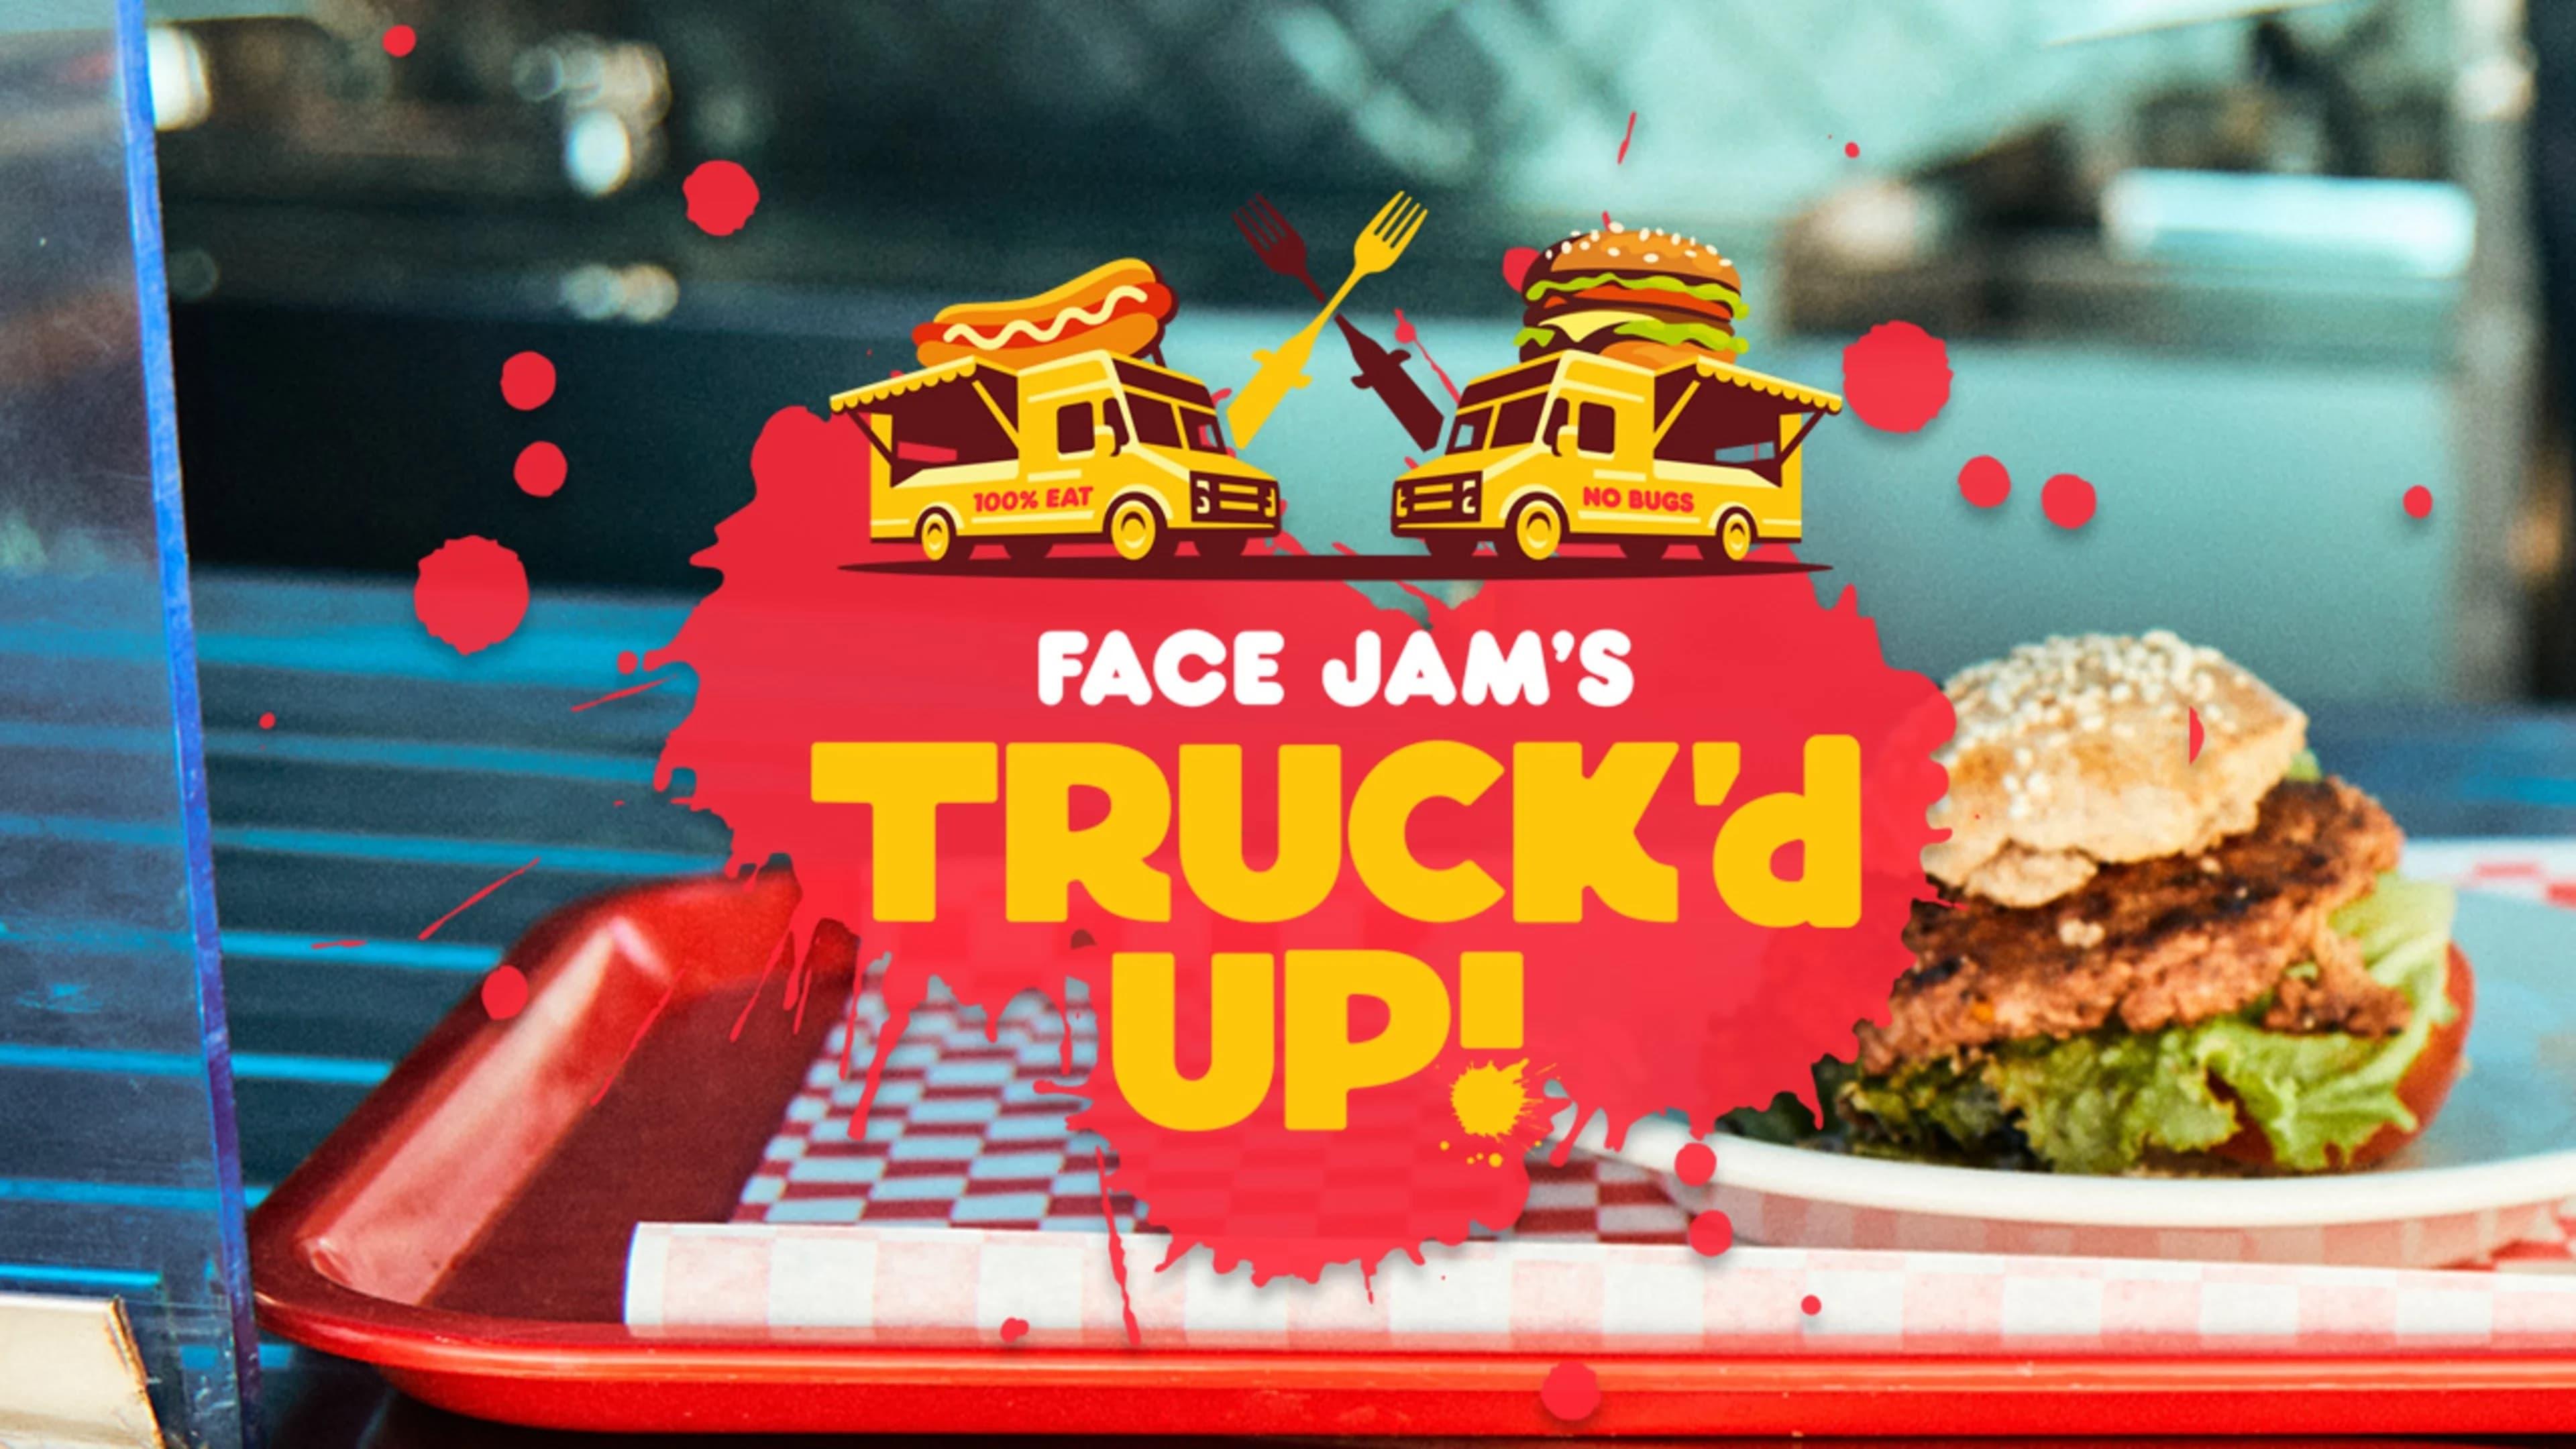 Face Jam's Truck'd Up! backdrop